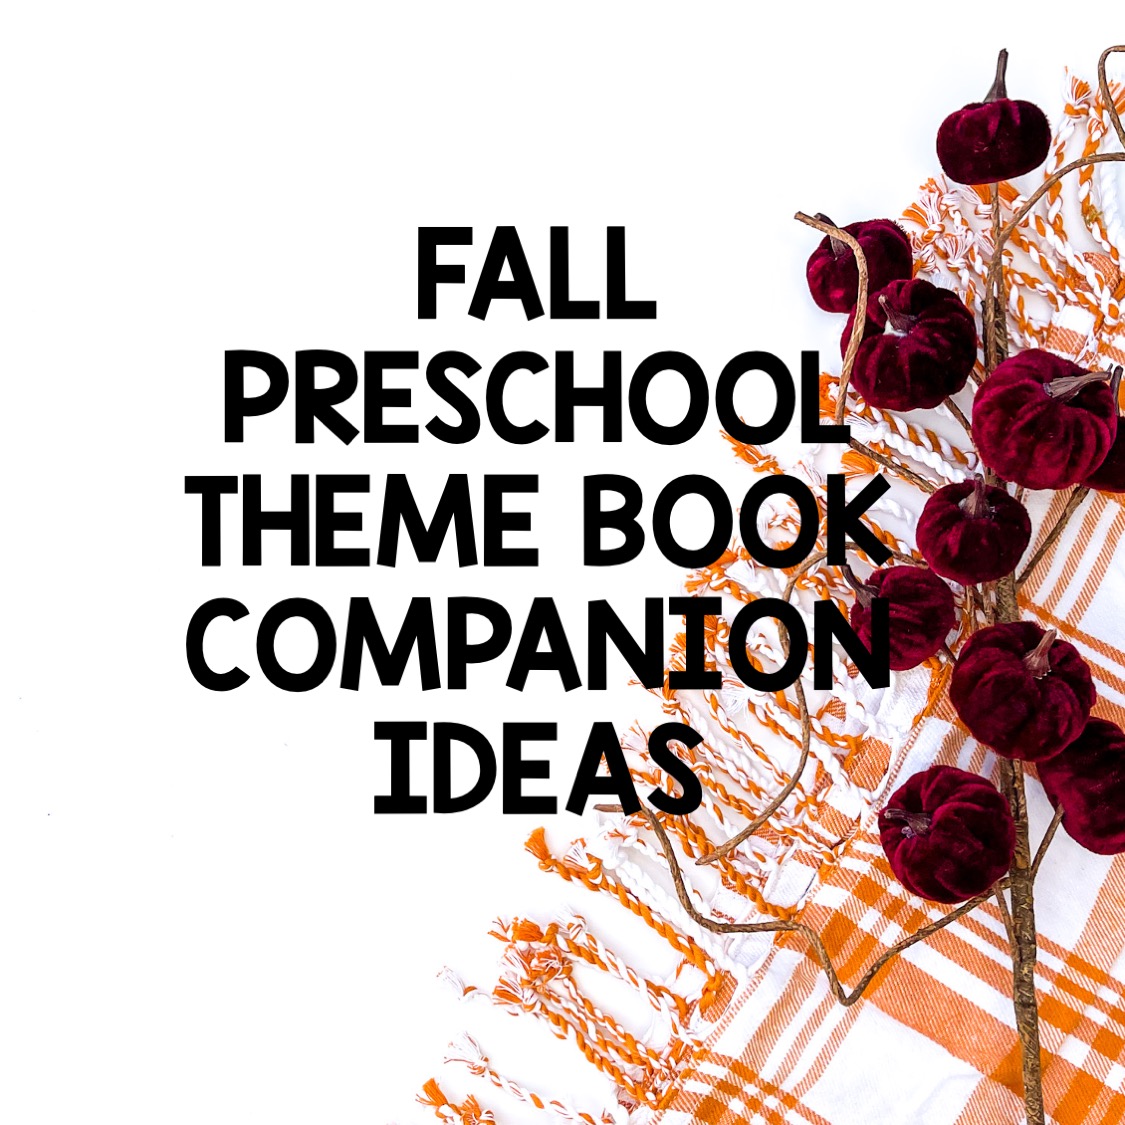 Fall Preschool Theme Book Ideas